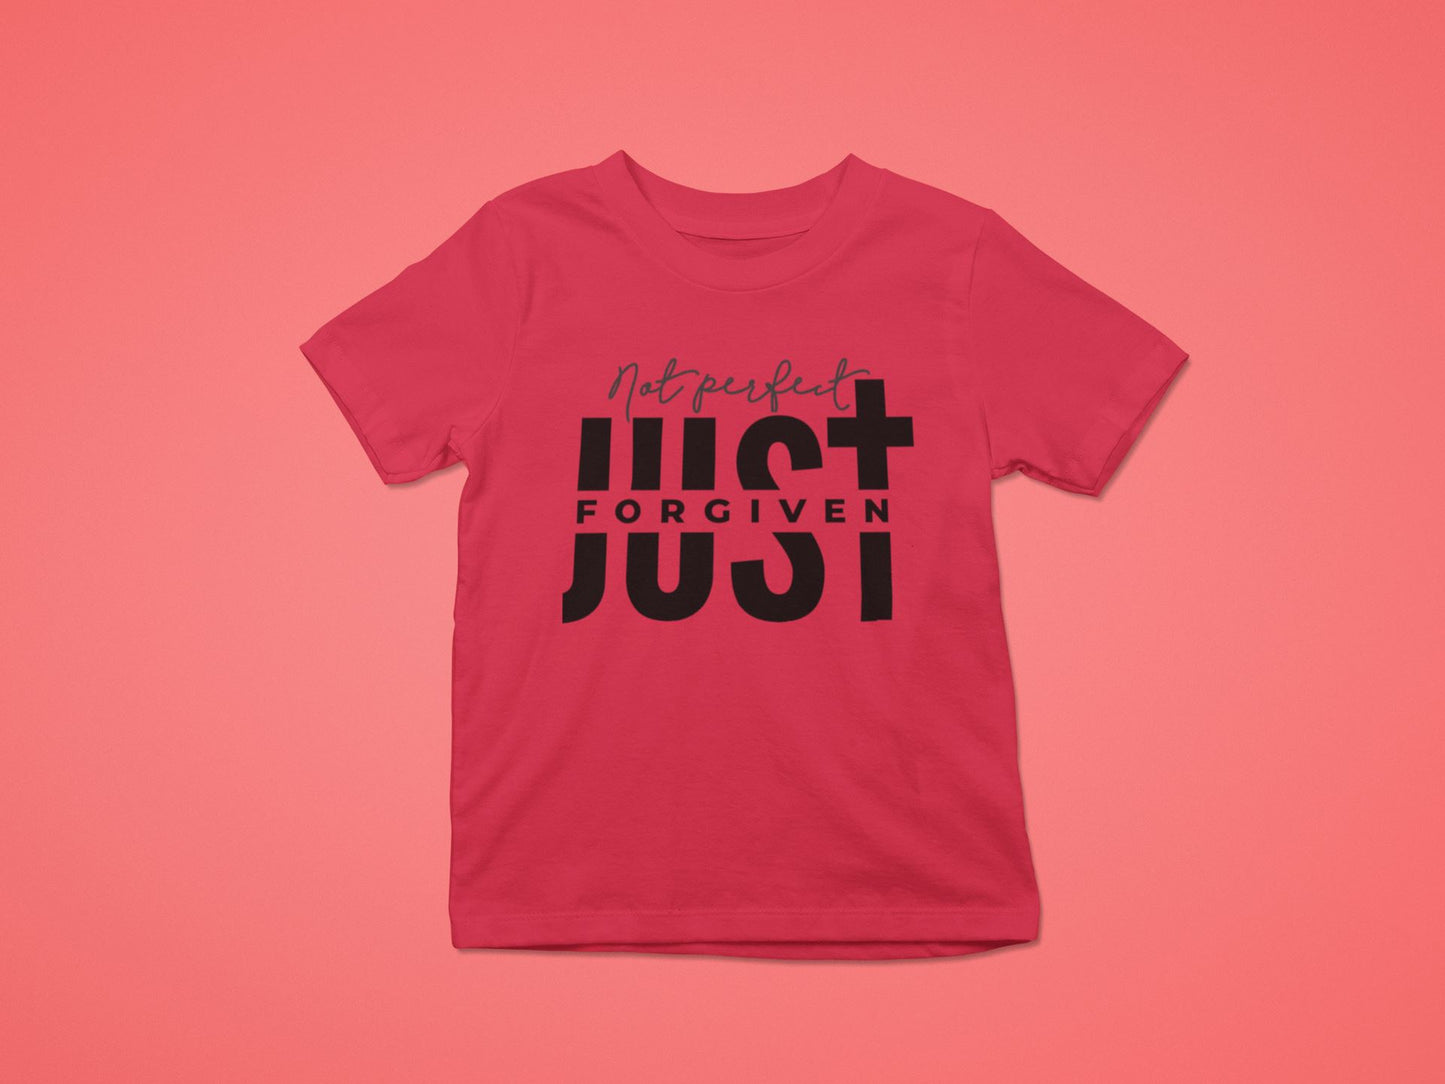 Forgiven (Not Perfect, Just Forgiven) T-Shirt B1ack By Design LLC 